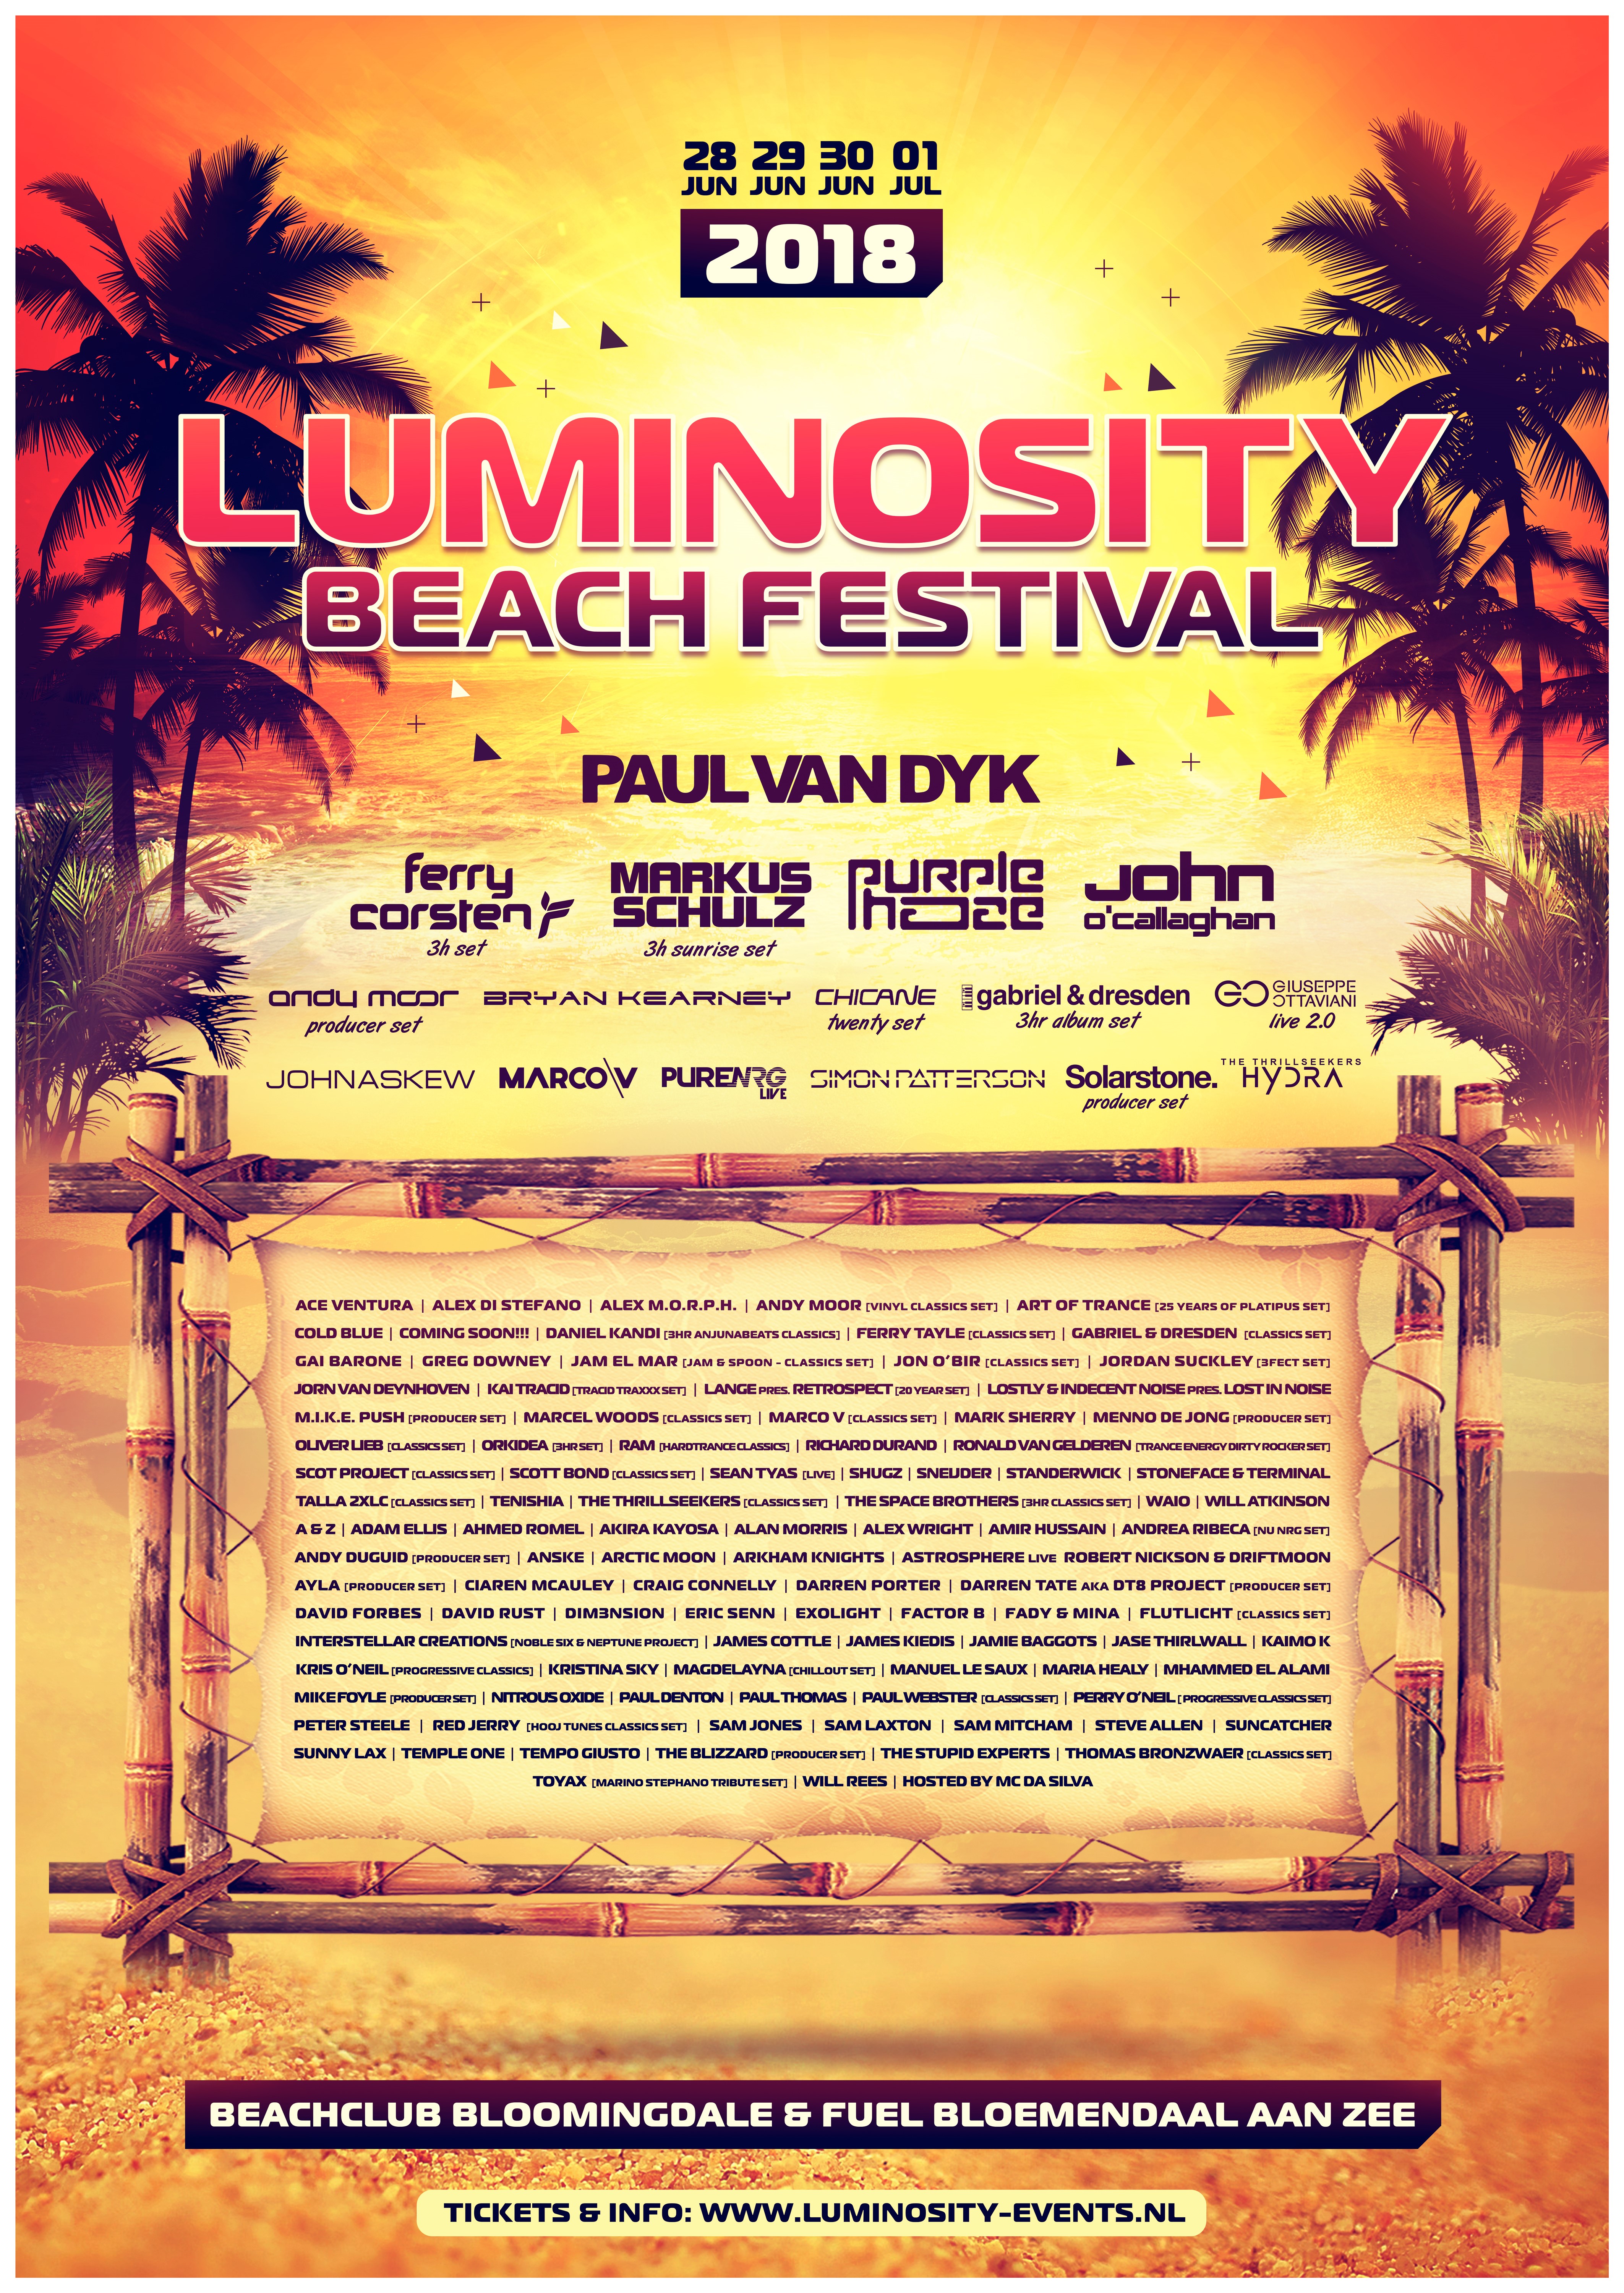 Luminosity Beach Festival 2018 | Luminosity Events